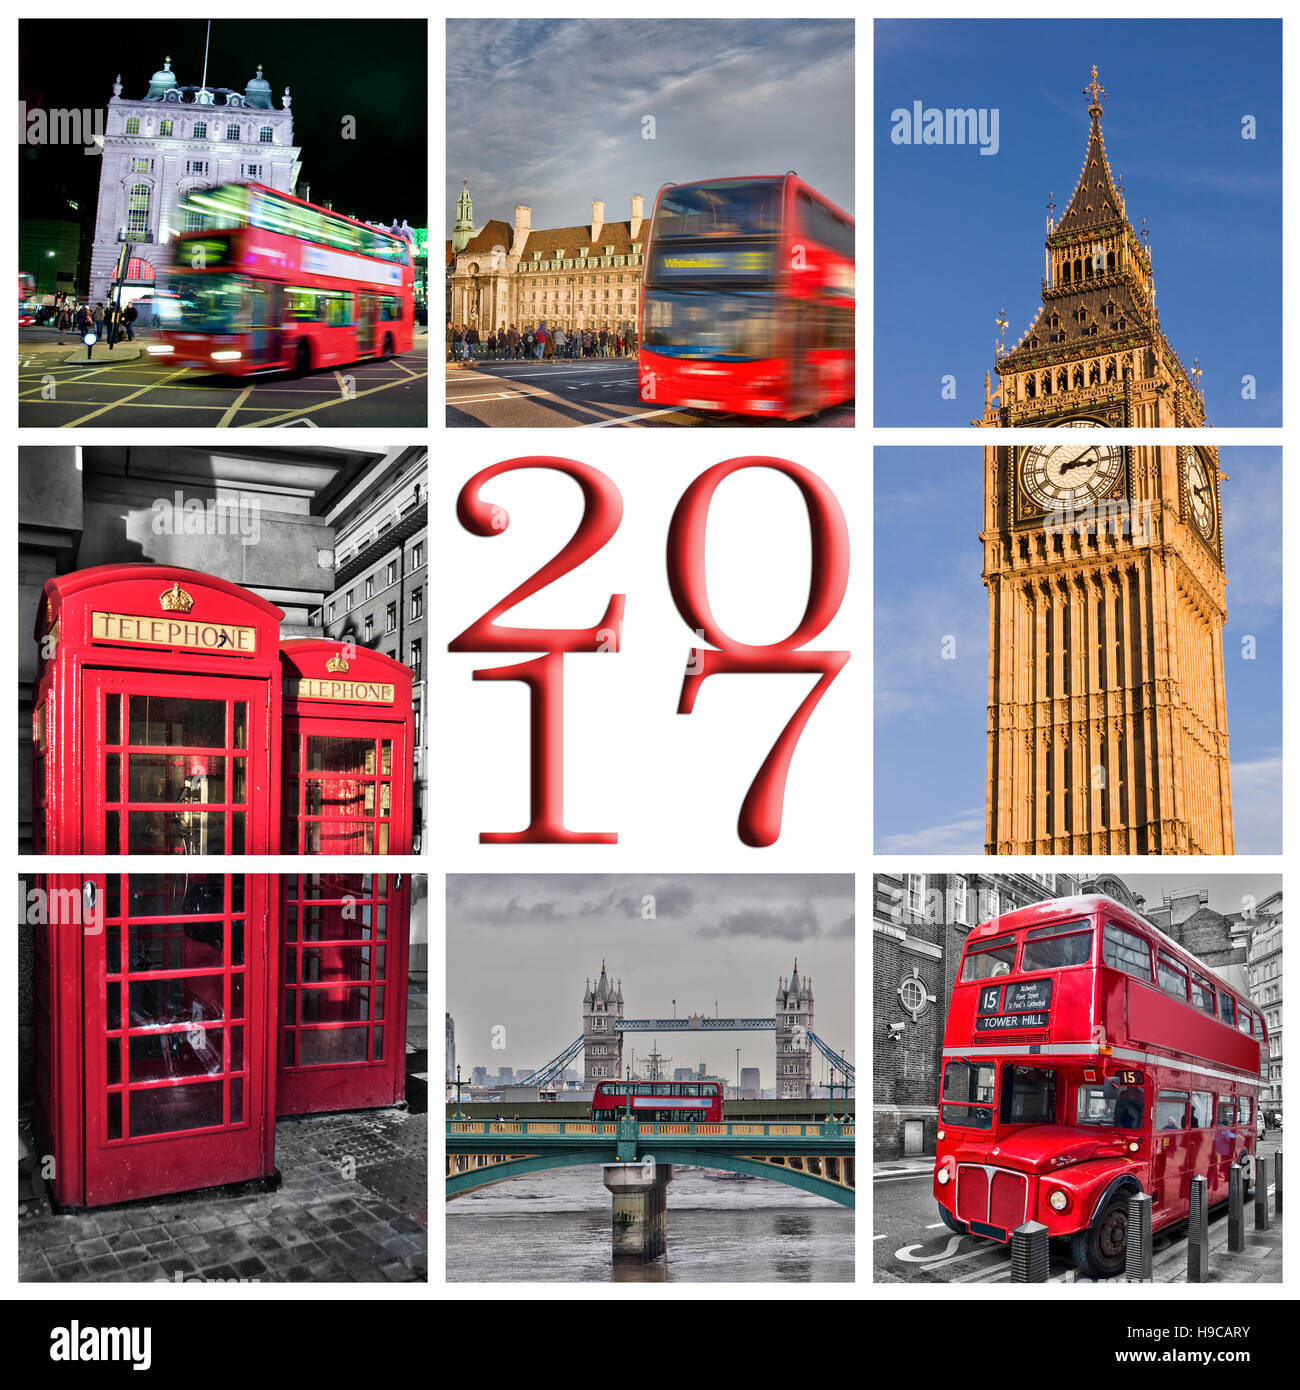 2017 London photos collage greeting card Stock Photo